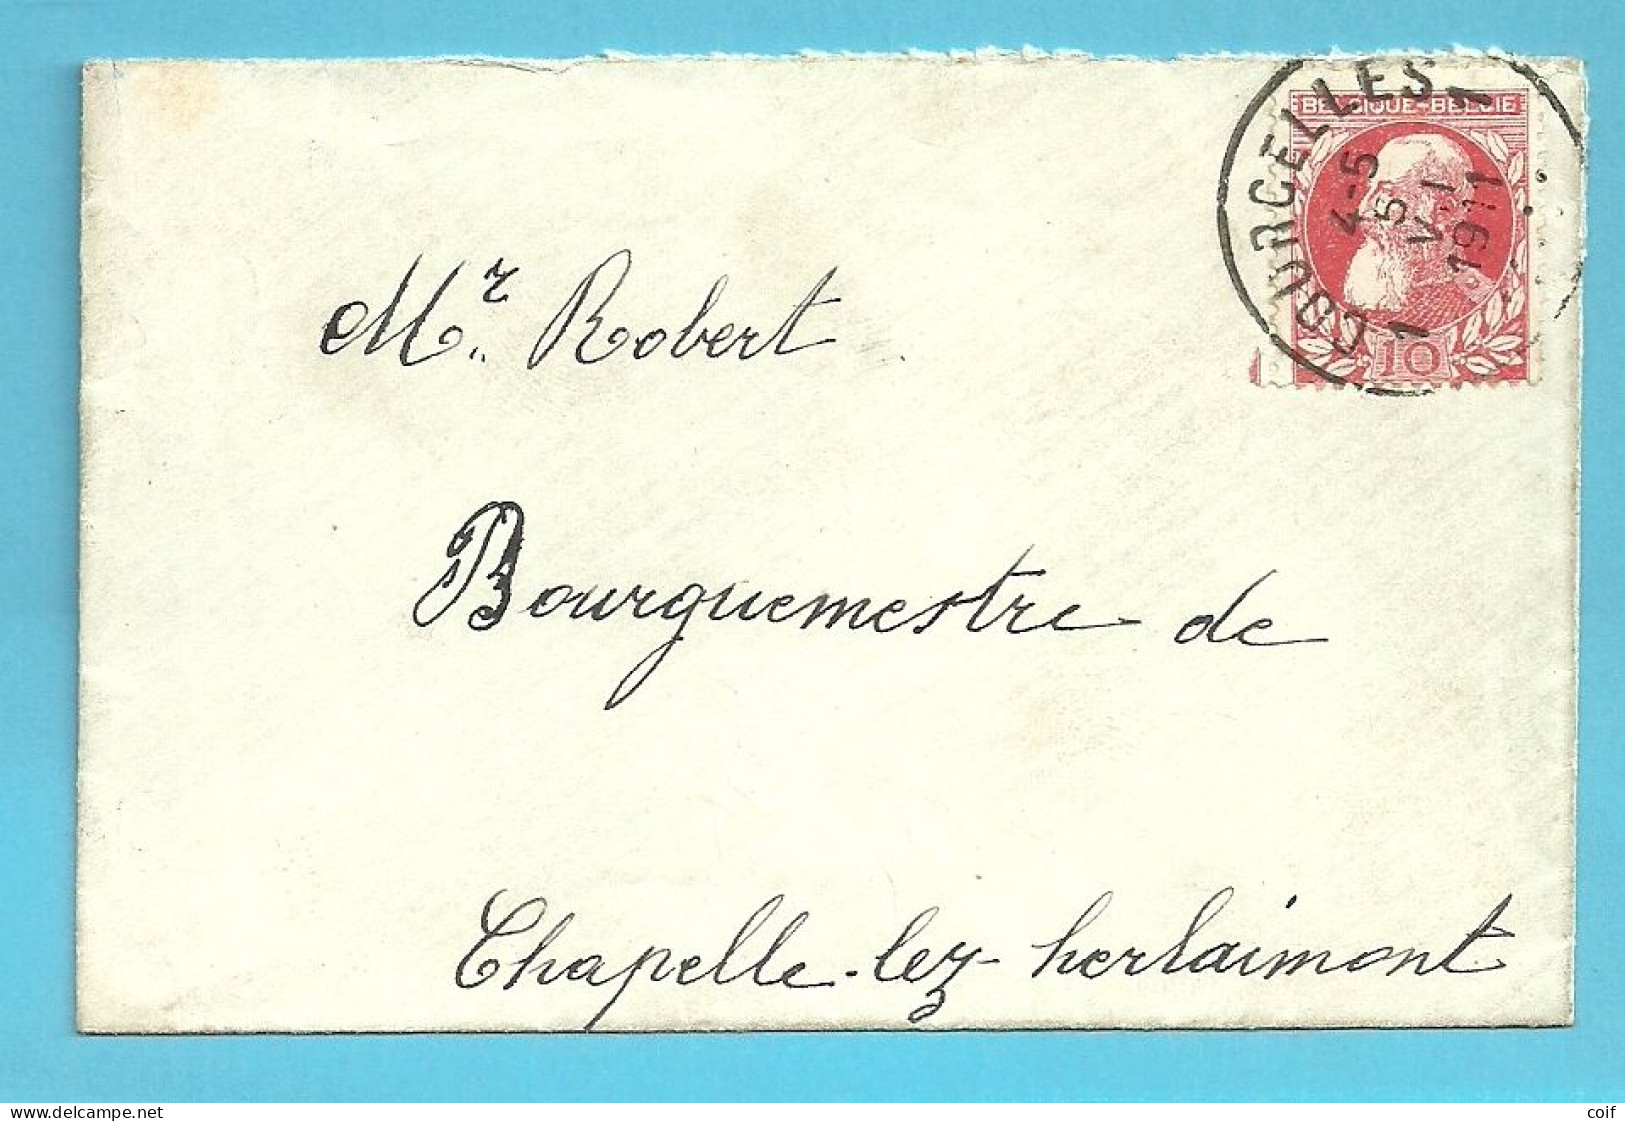 74 Op Brief Stempel COURCELLES 1 (28mm) - 1905 Barba Grossa